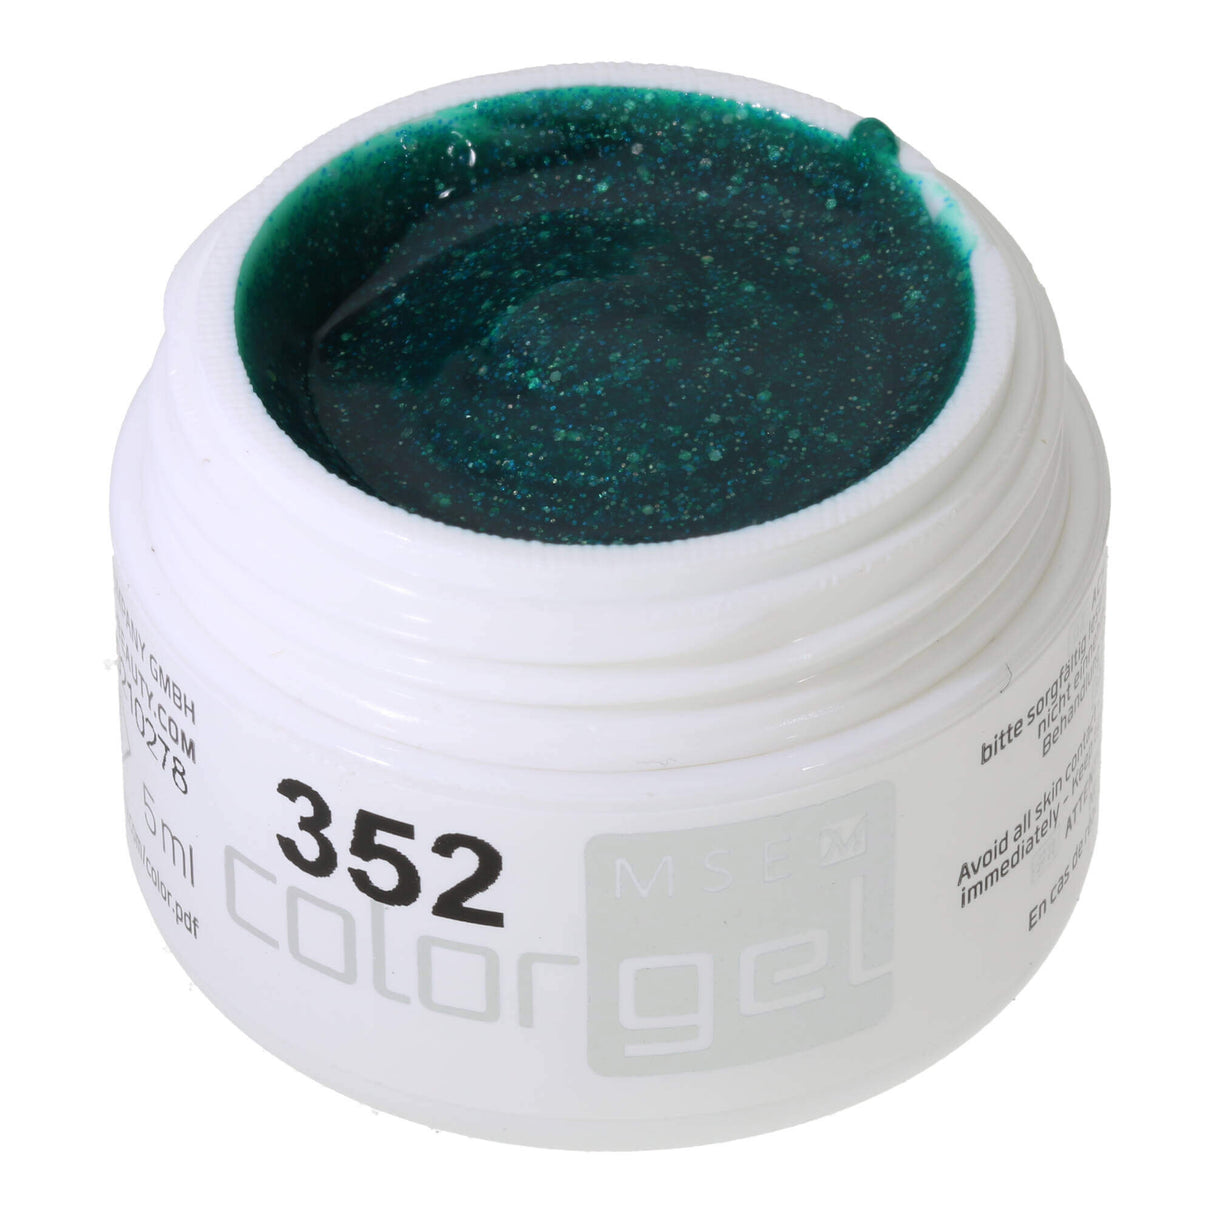 # 352 Premium-GLITTER Color Gel 5ml Luminous green with green-iridescent glitter